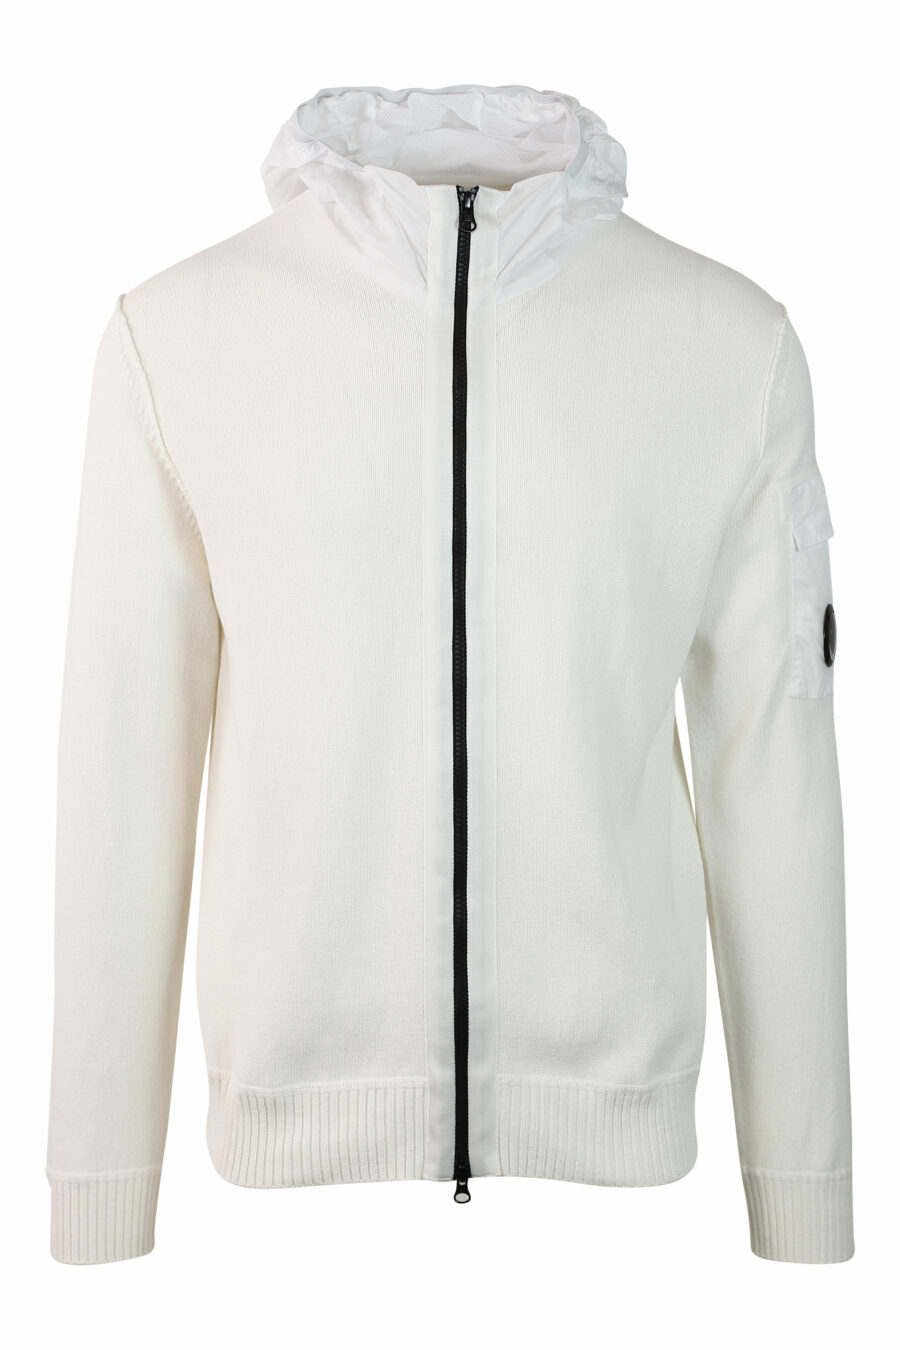 White hooded sweatshirt with zipped hood and circular mini logo - IMG 0130